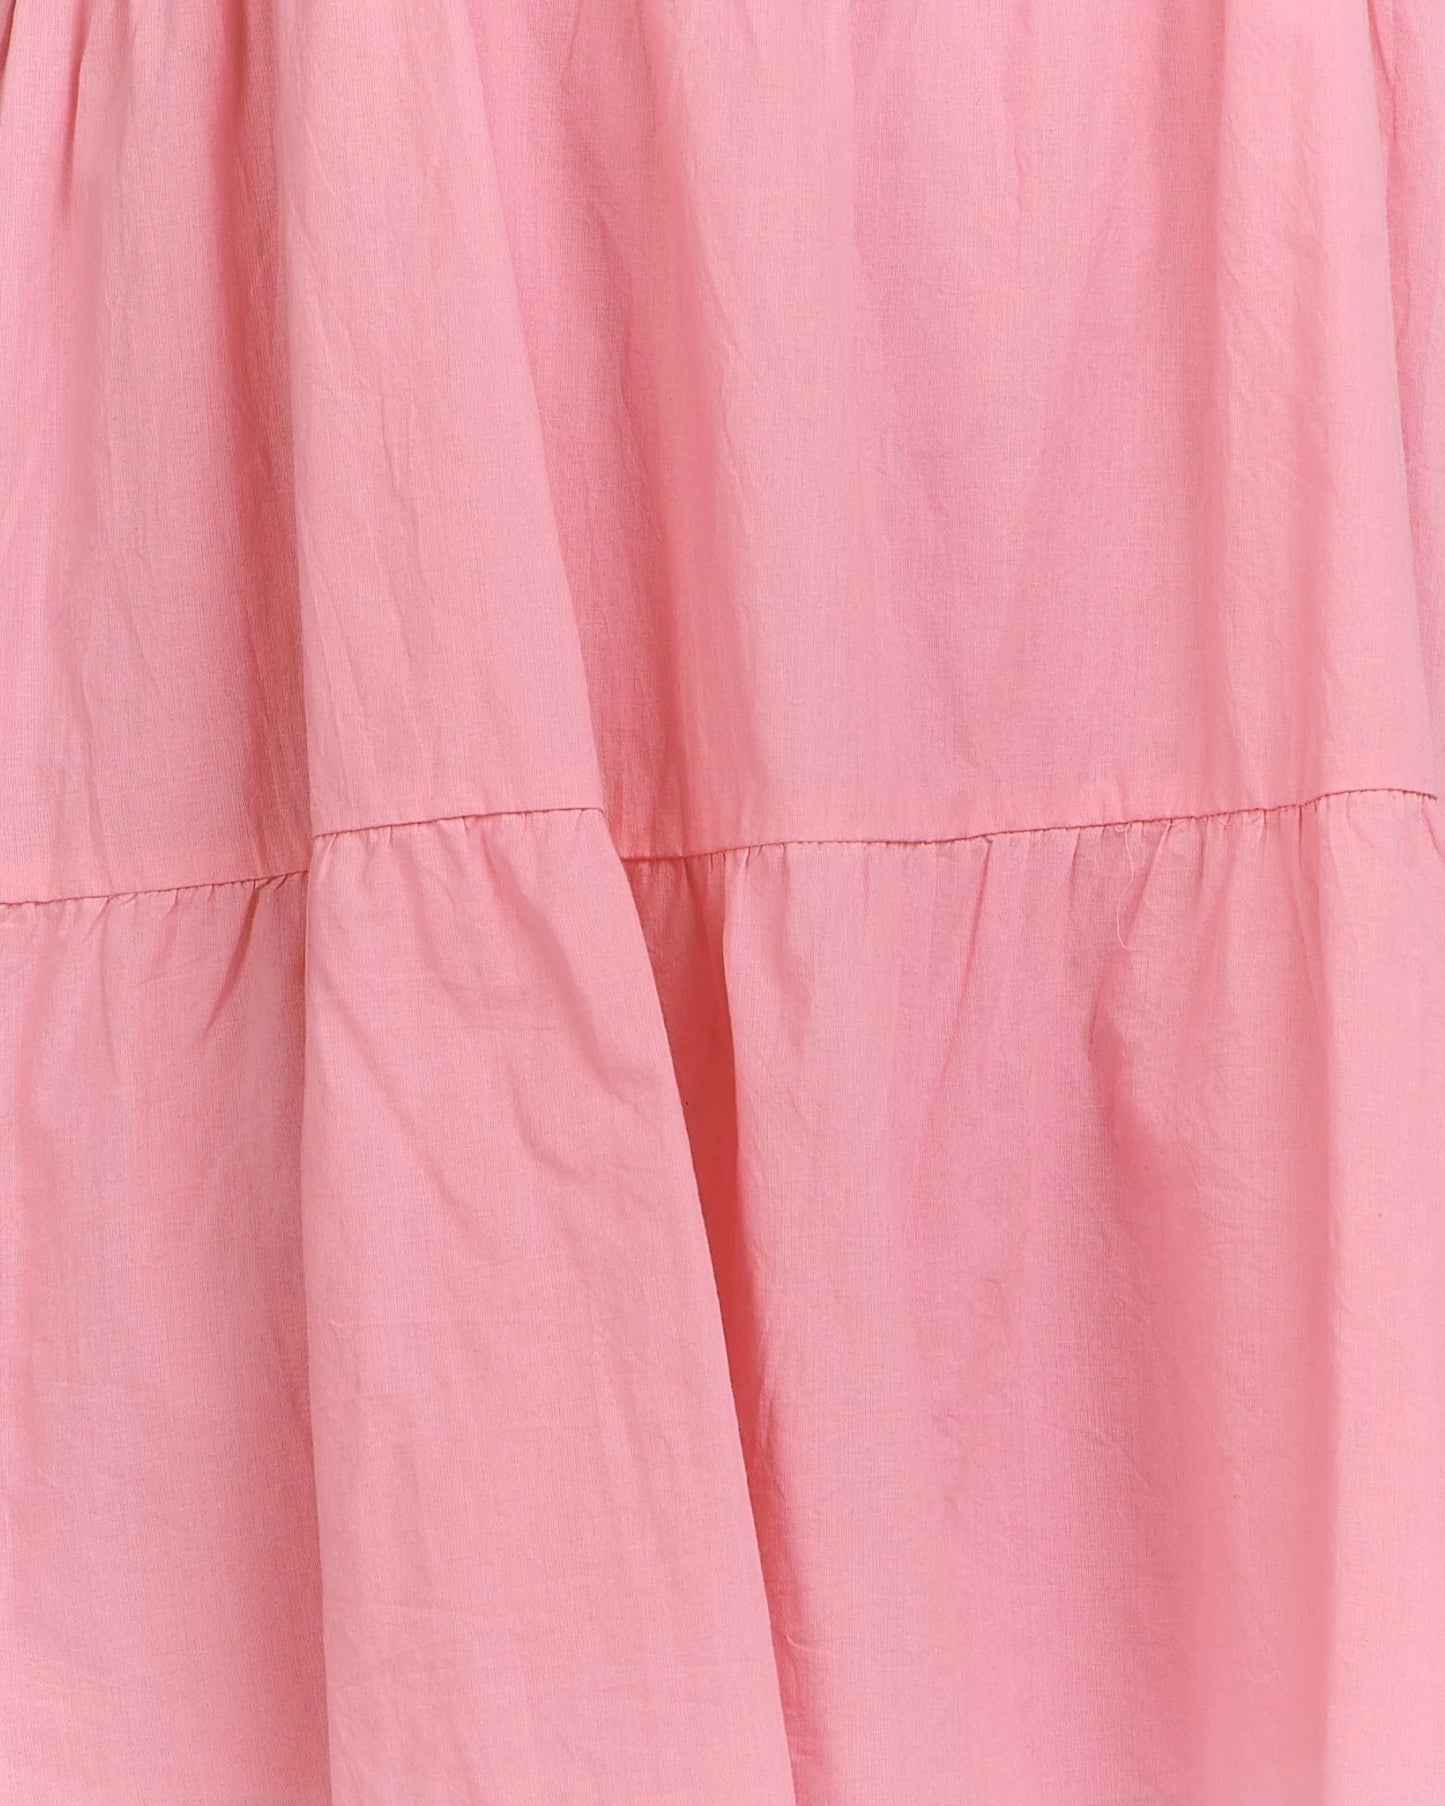 Paris Mini Dress Pink